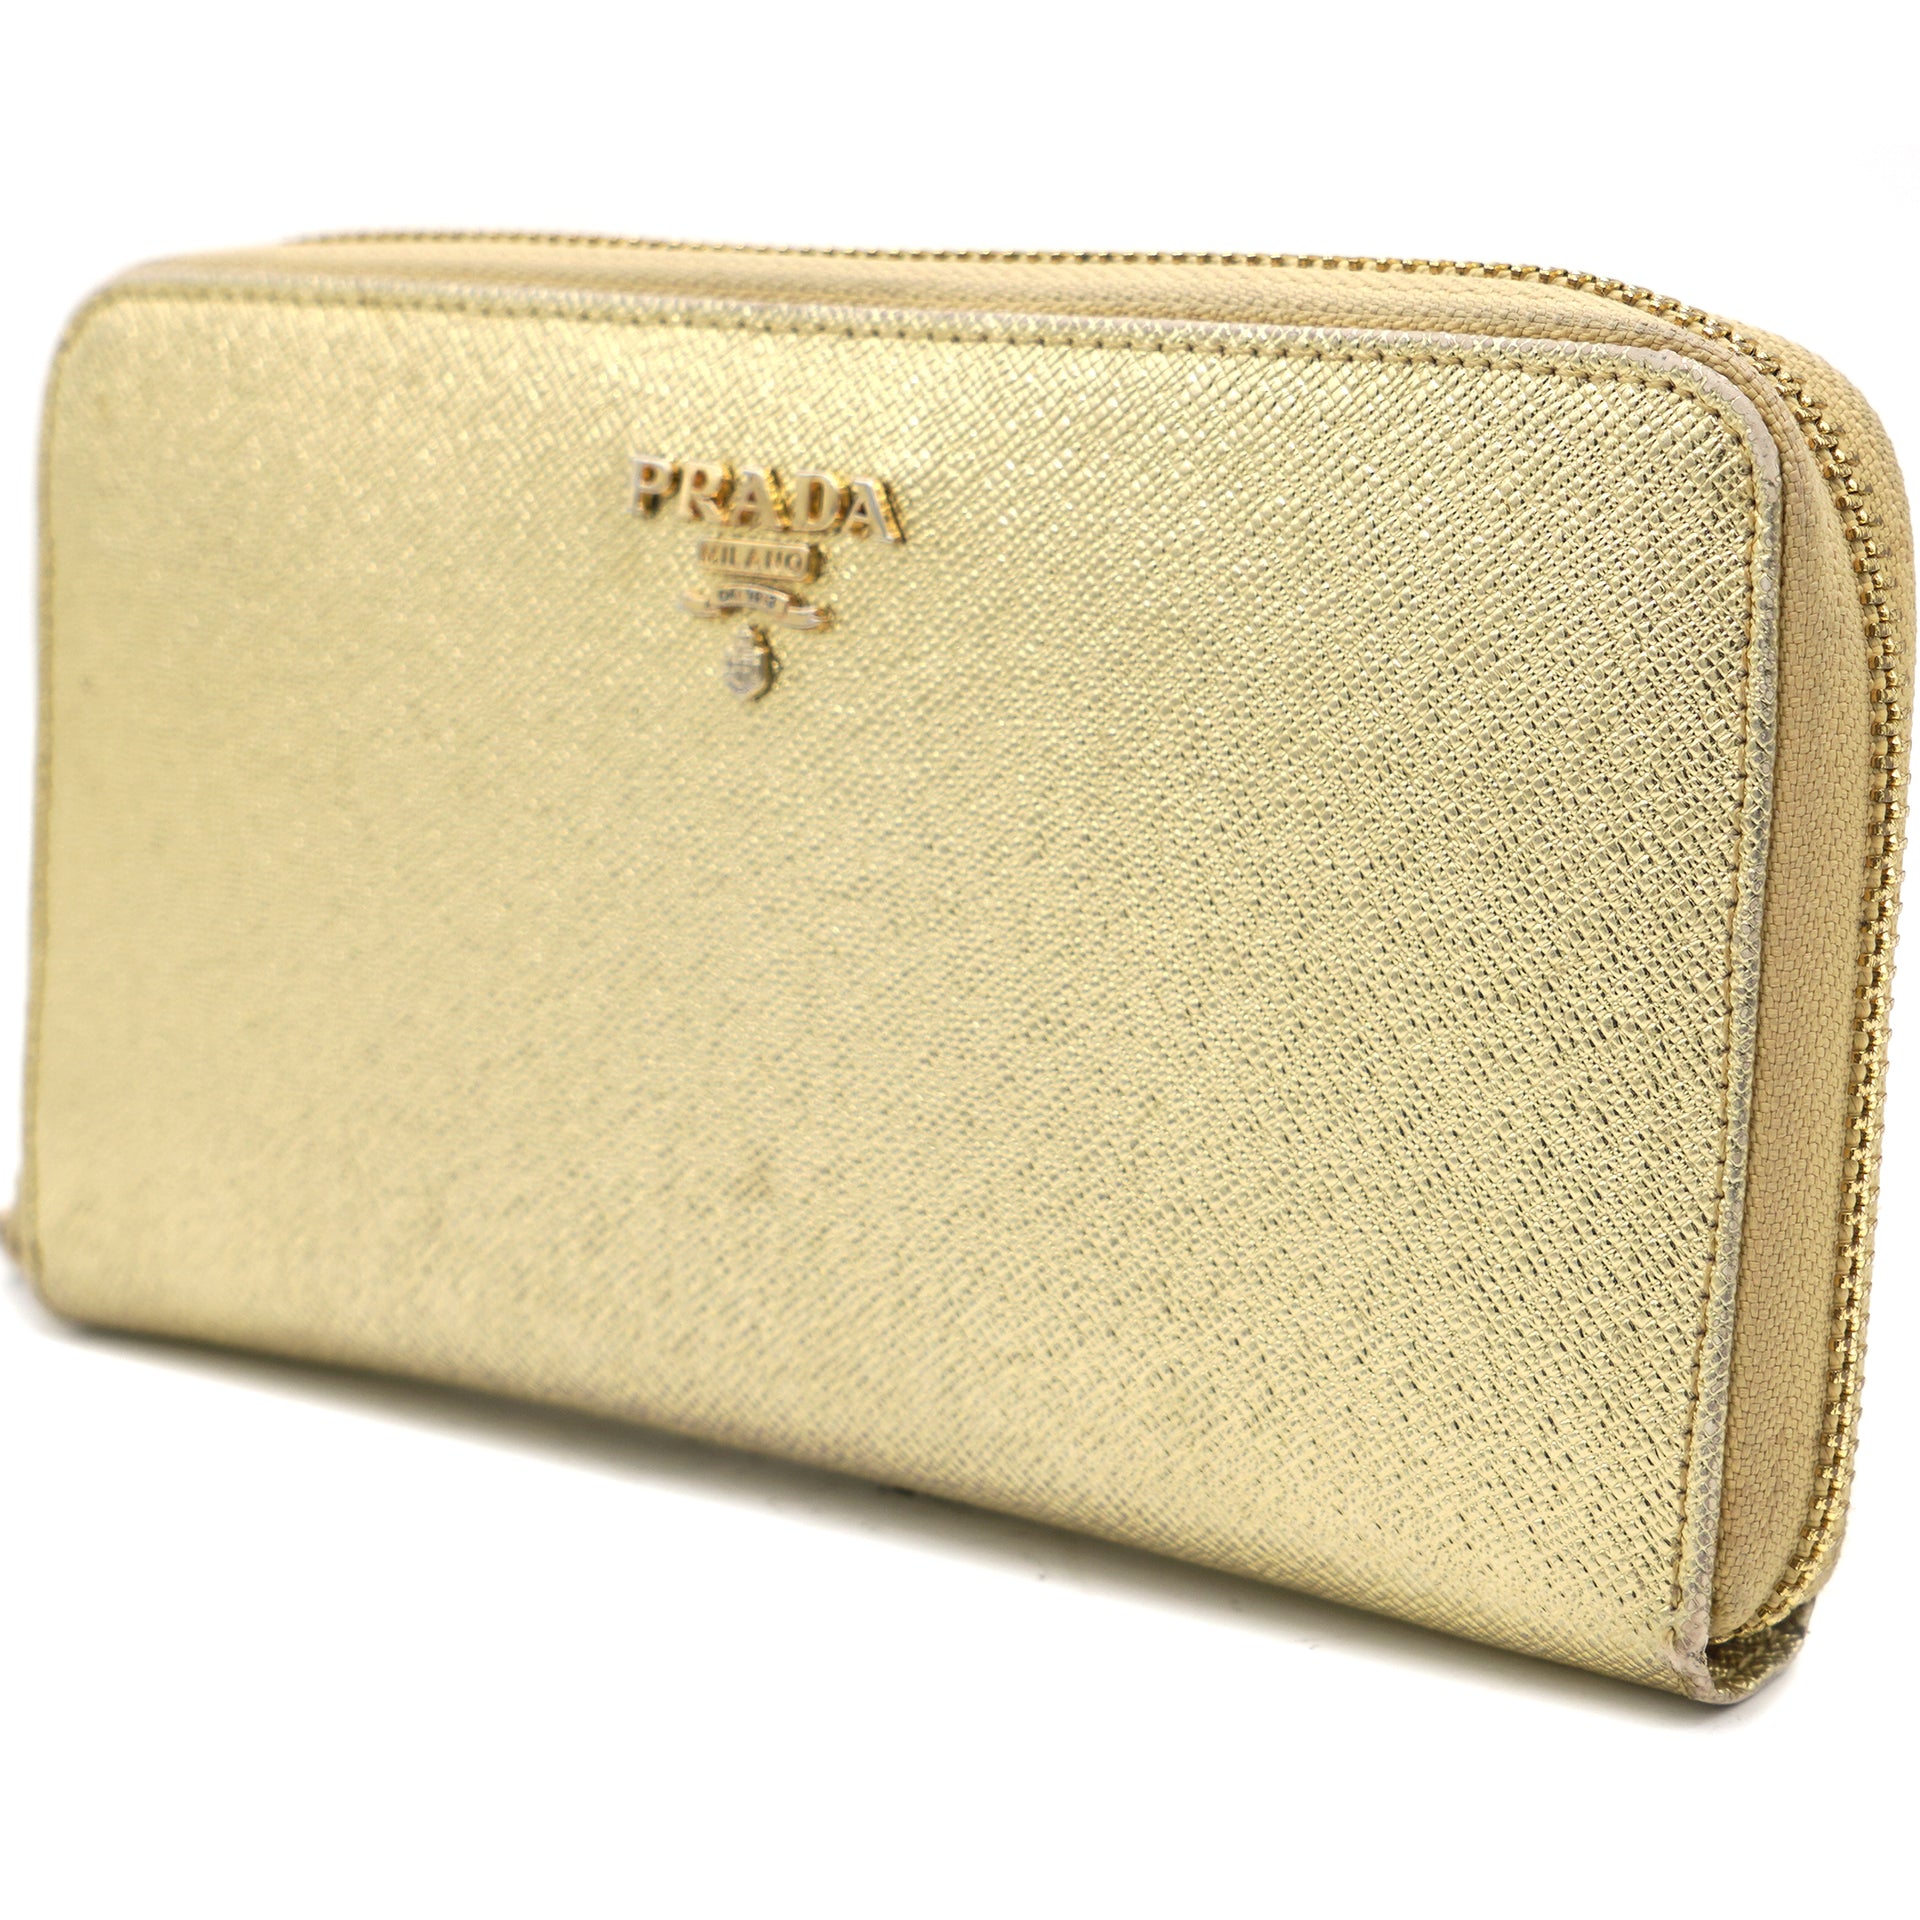 PRADA blue saffiano leather gold logo chain crossbody long wallet